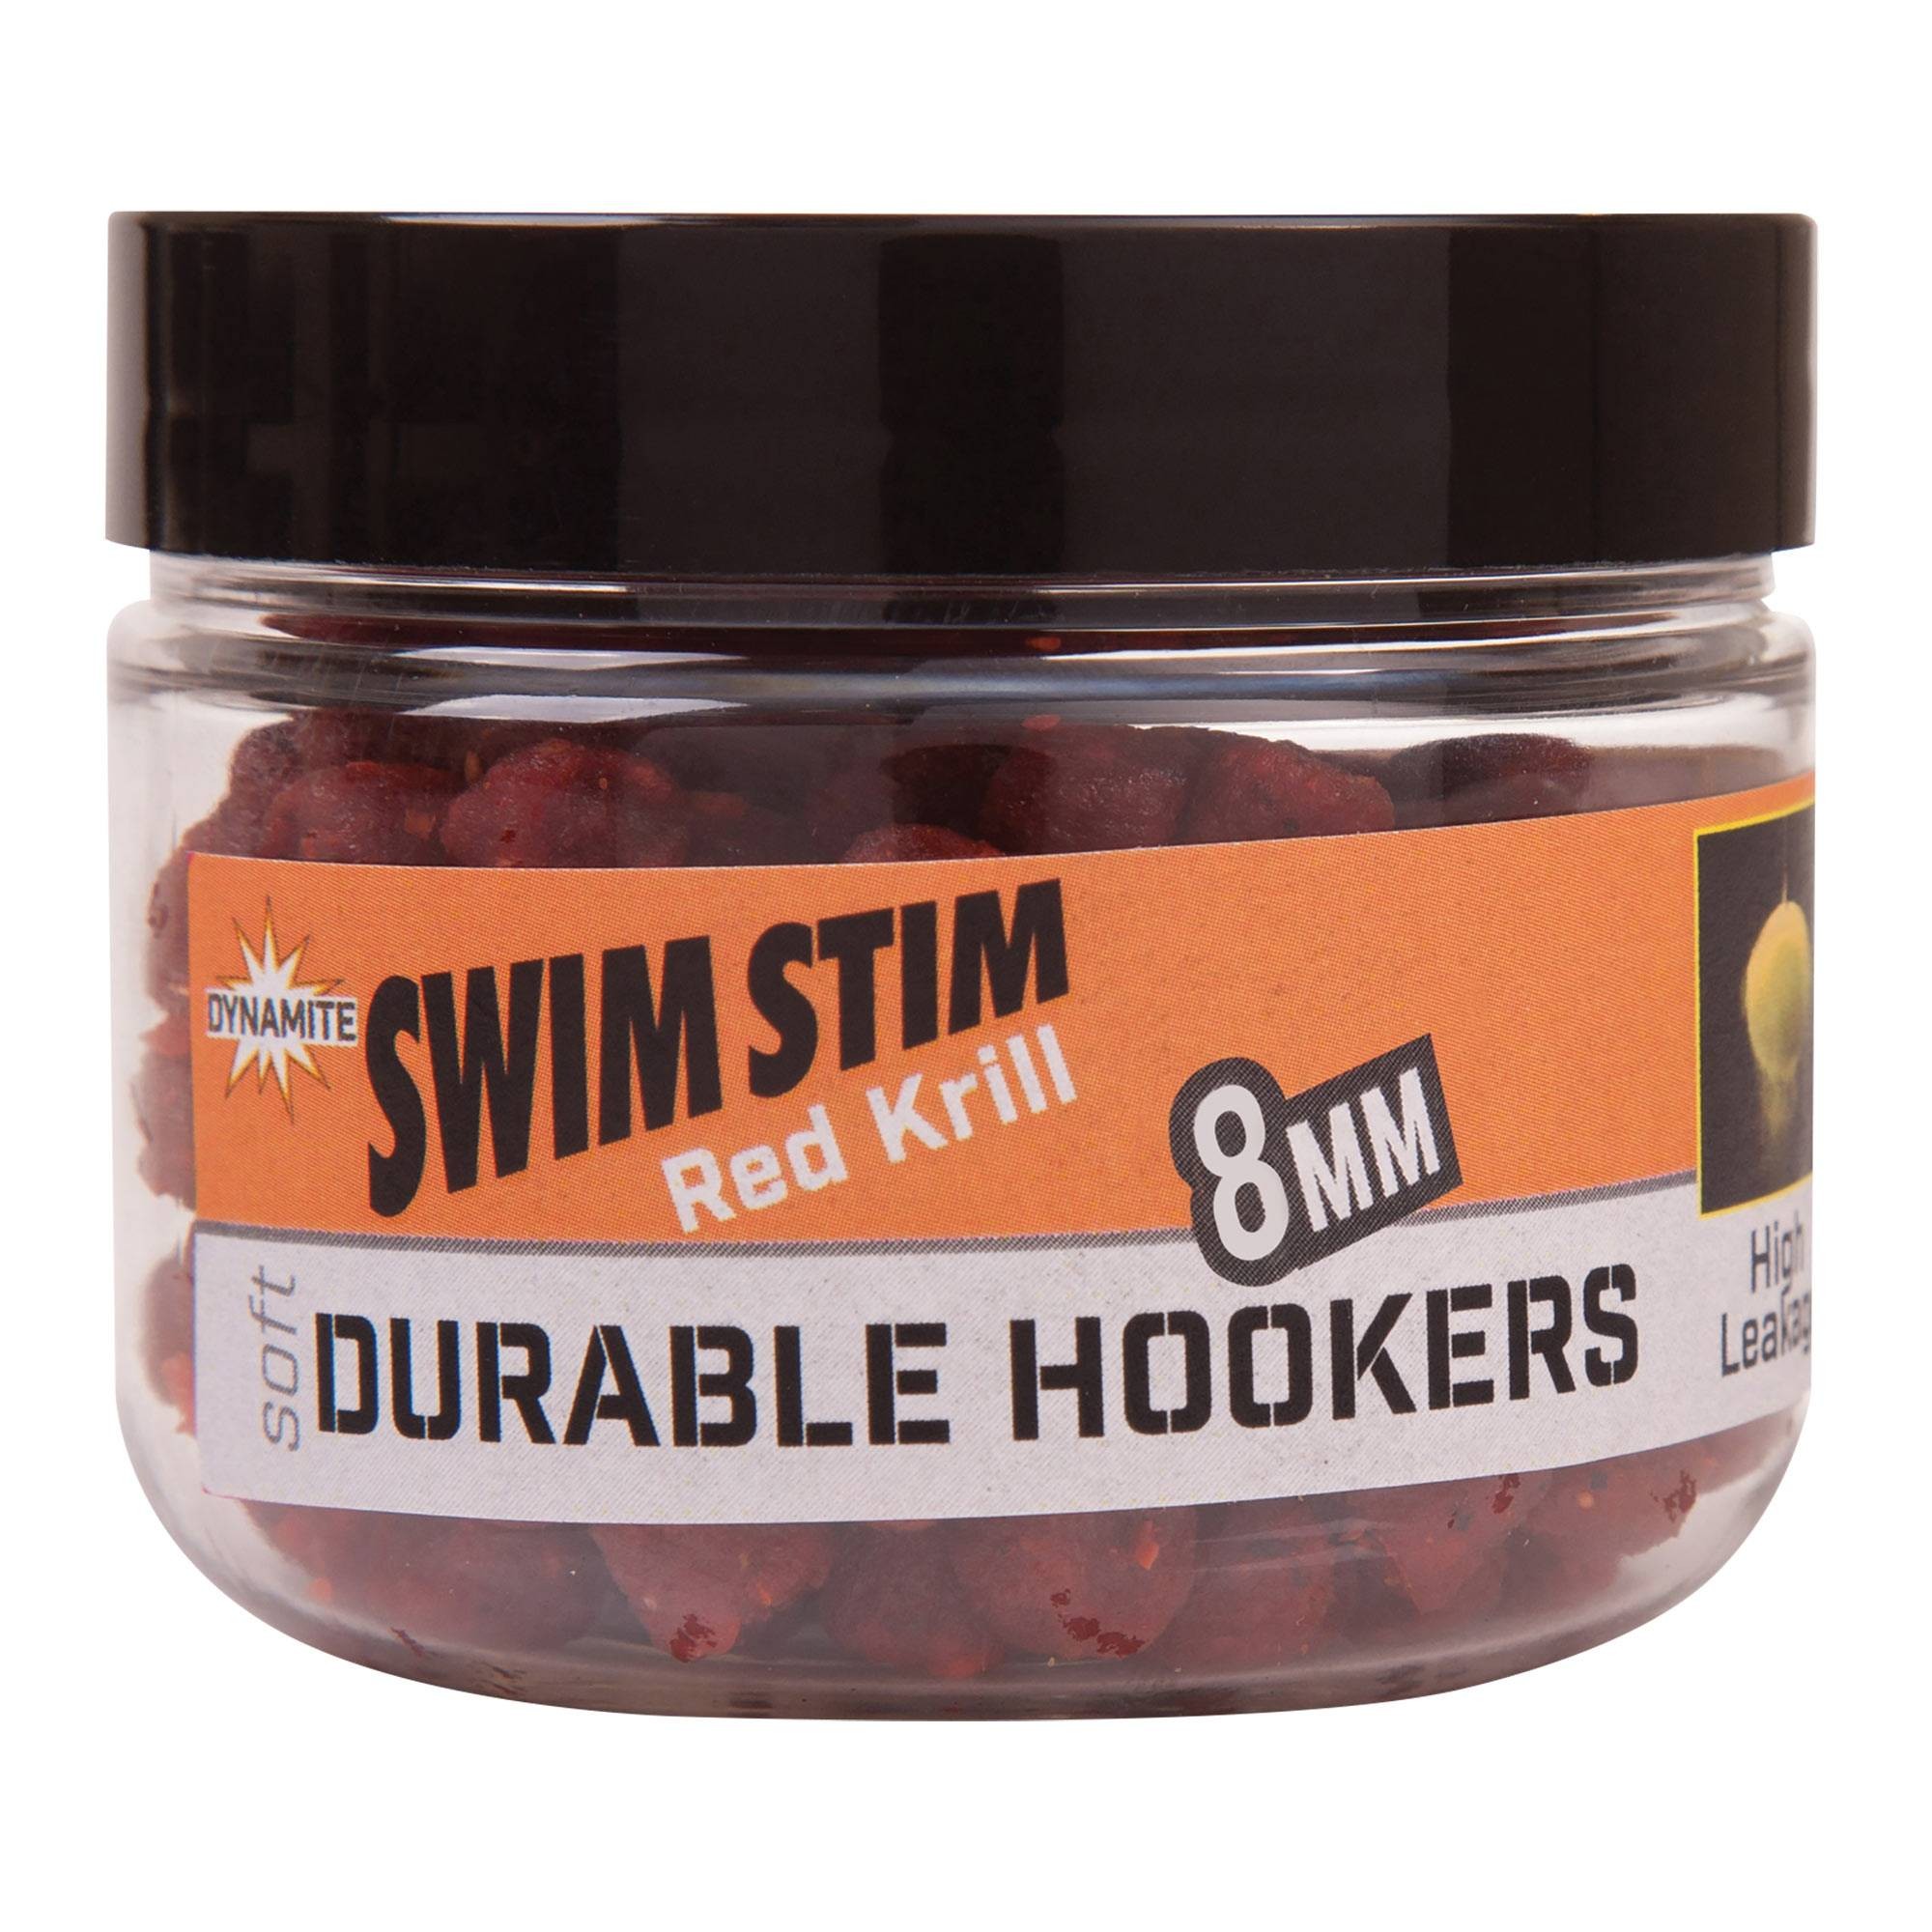 Dynamite Baits Durable Hookers Shrimp & Krill 12mm